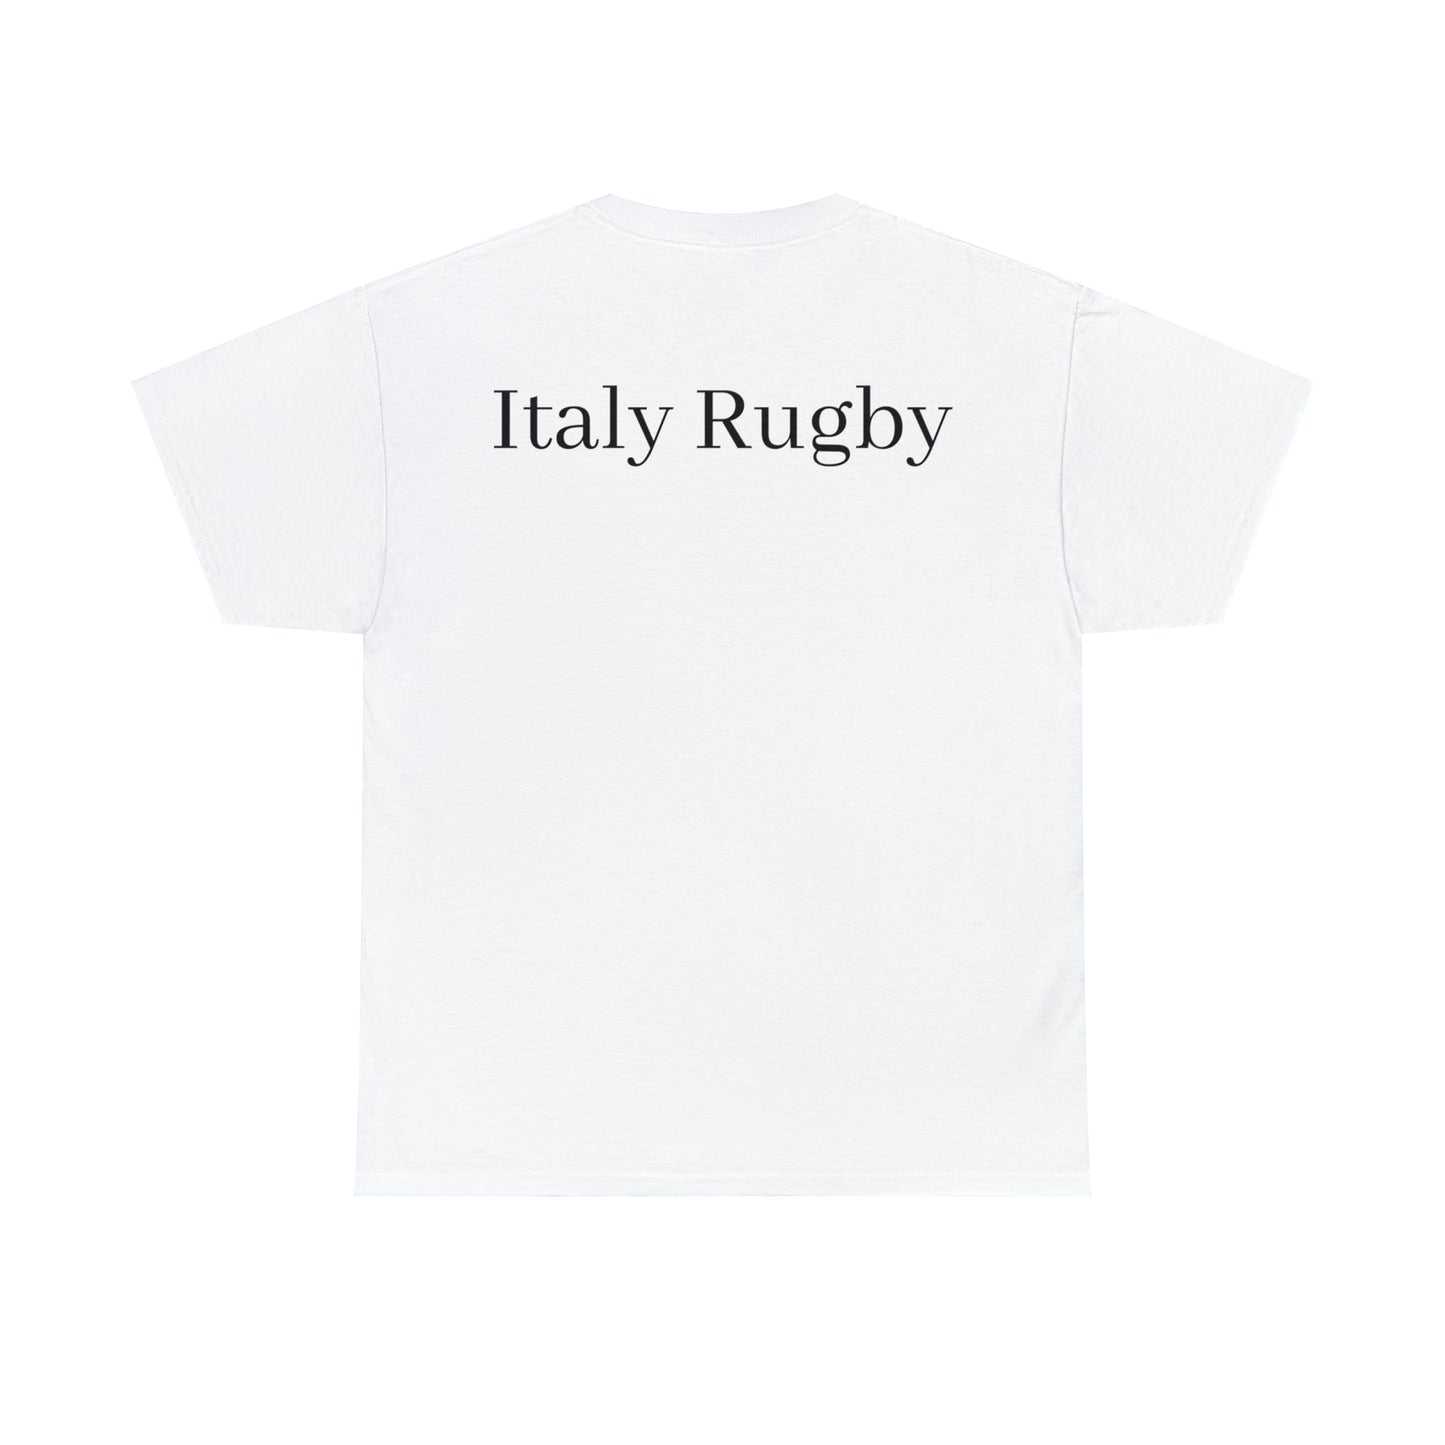 Italy Lifting the RWC - light shirts